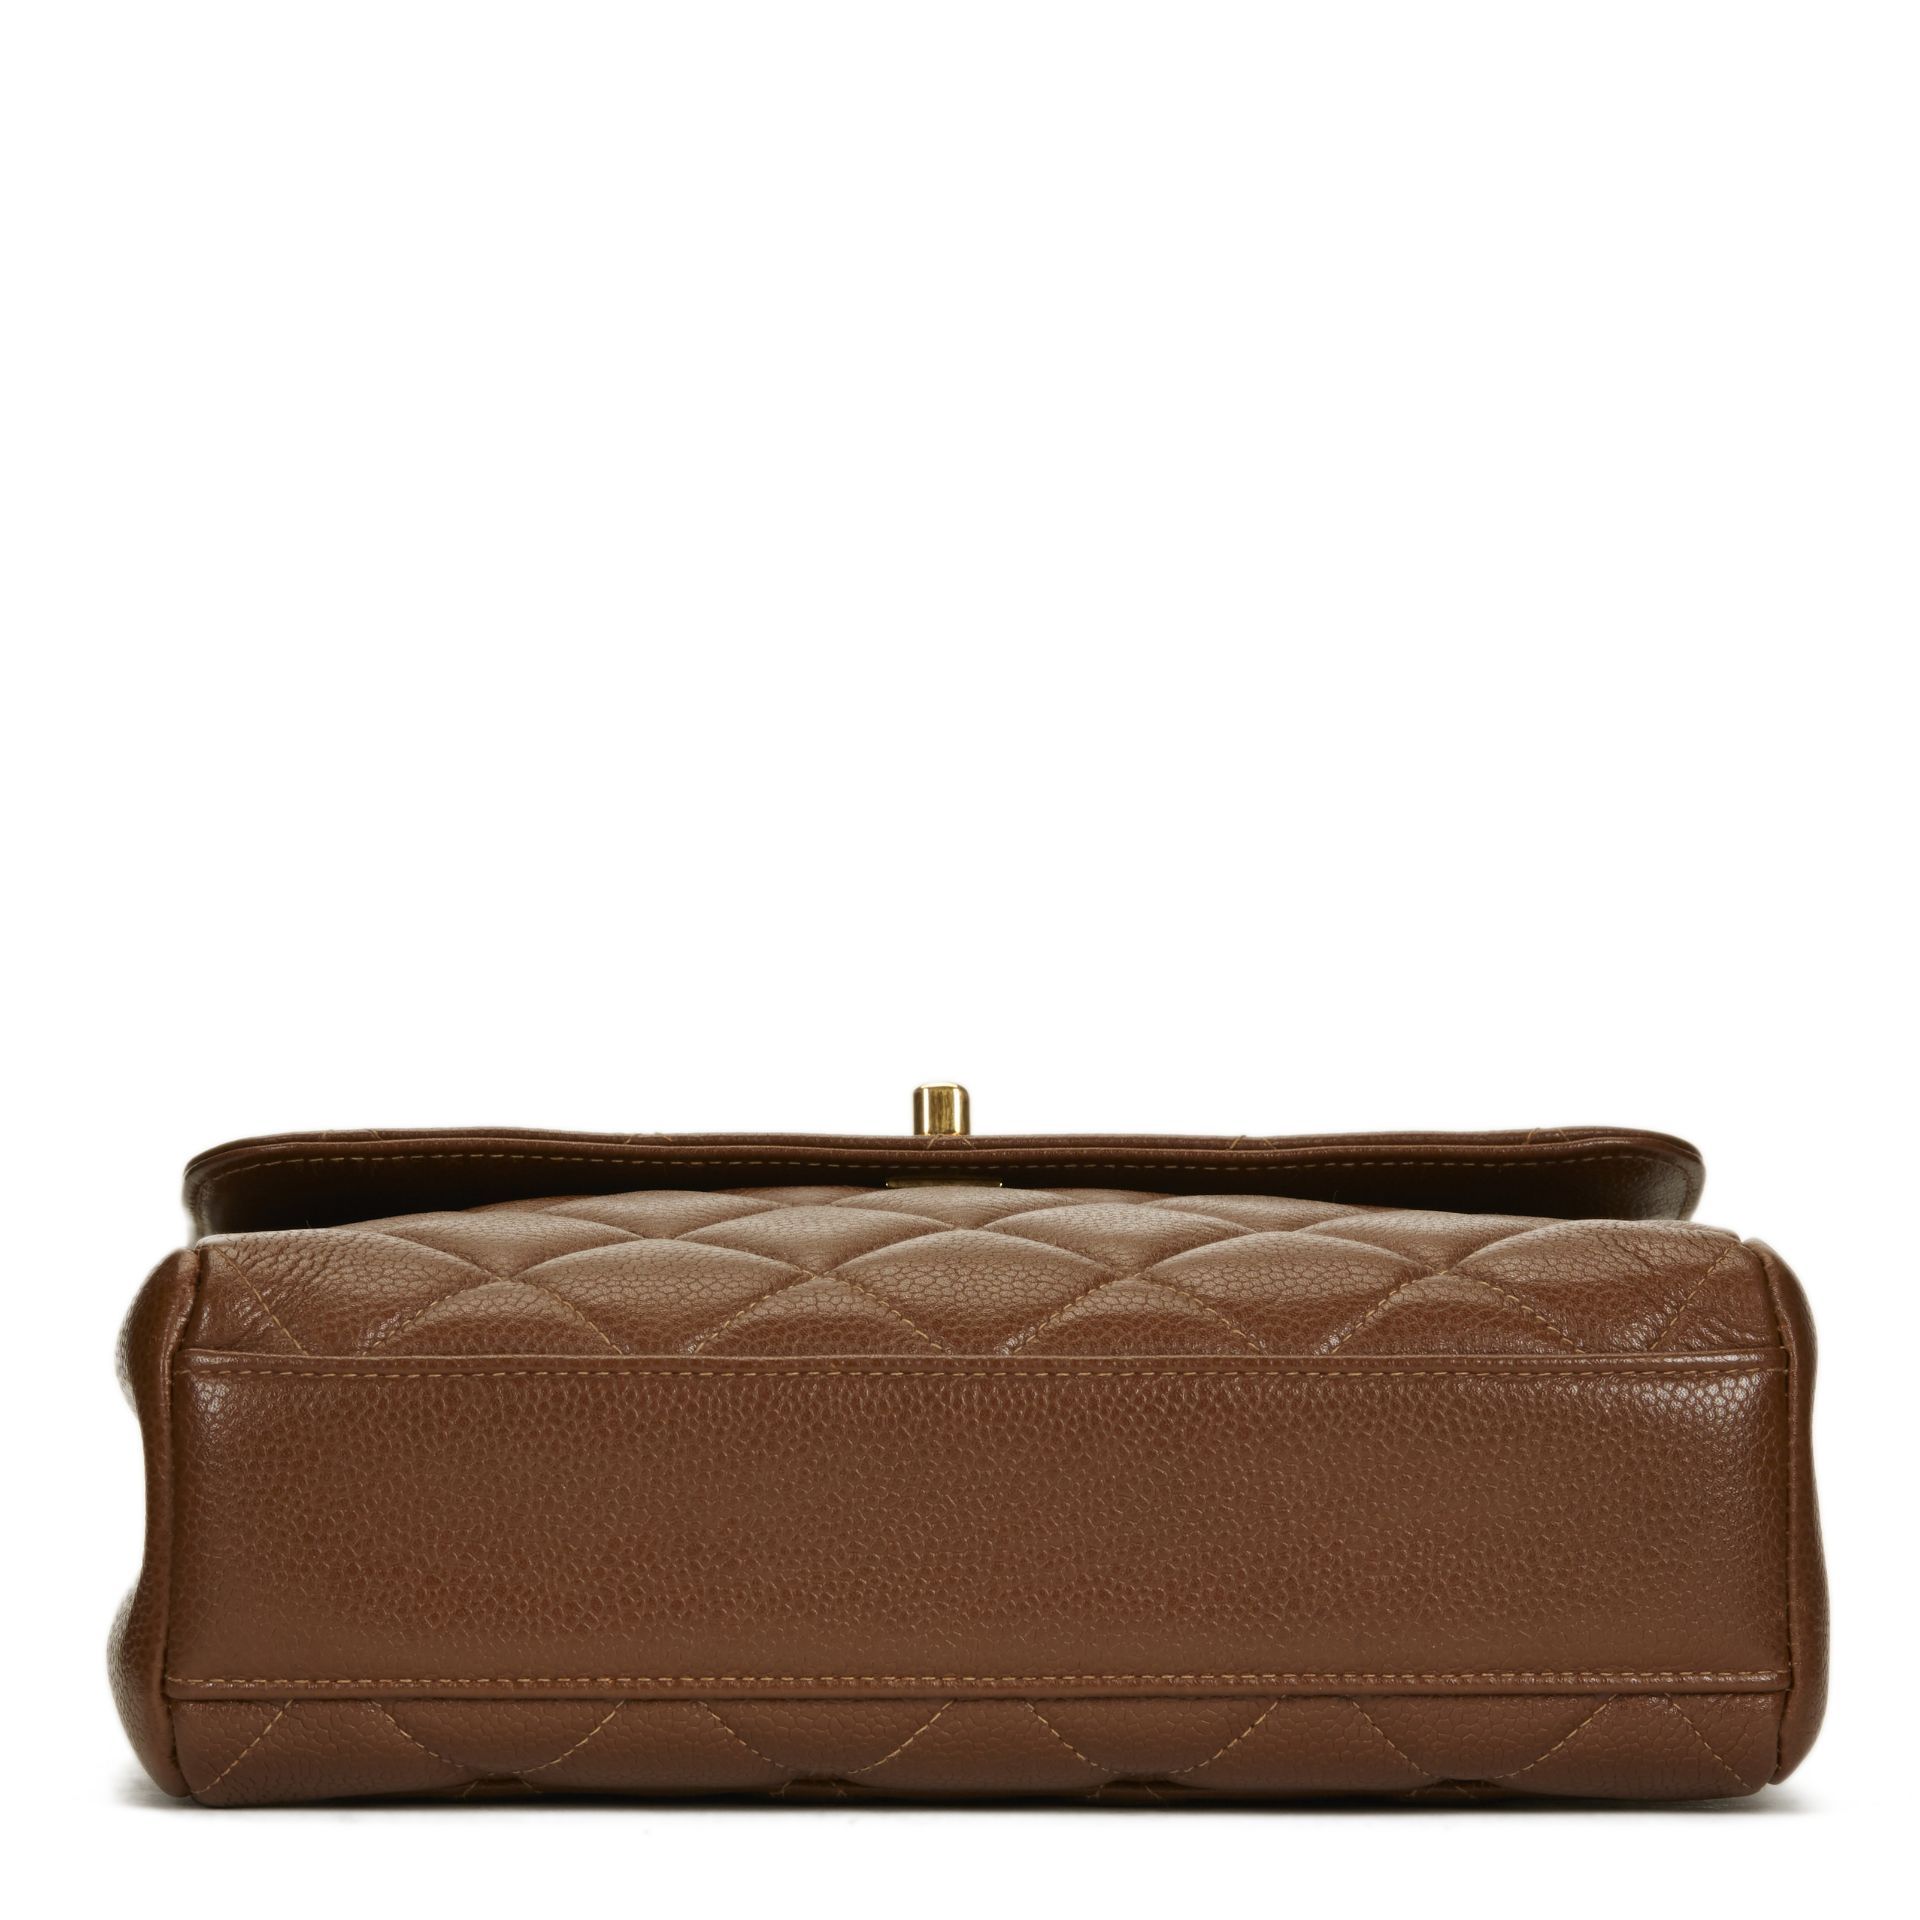 Chanel Single Flap Bag - Image 6 of 11